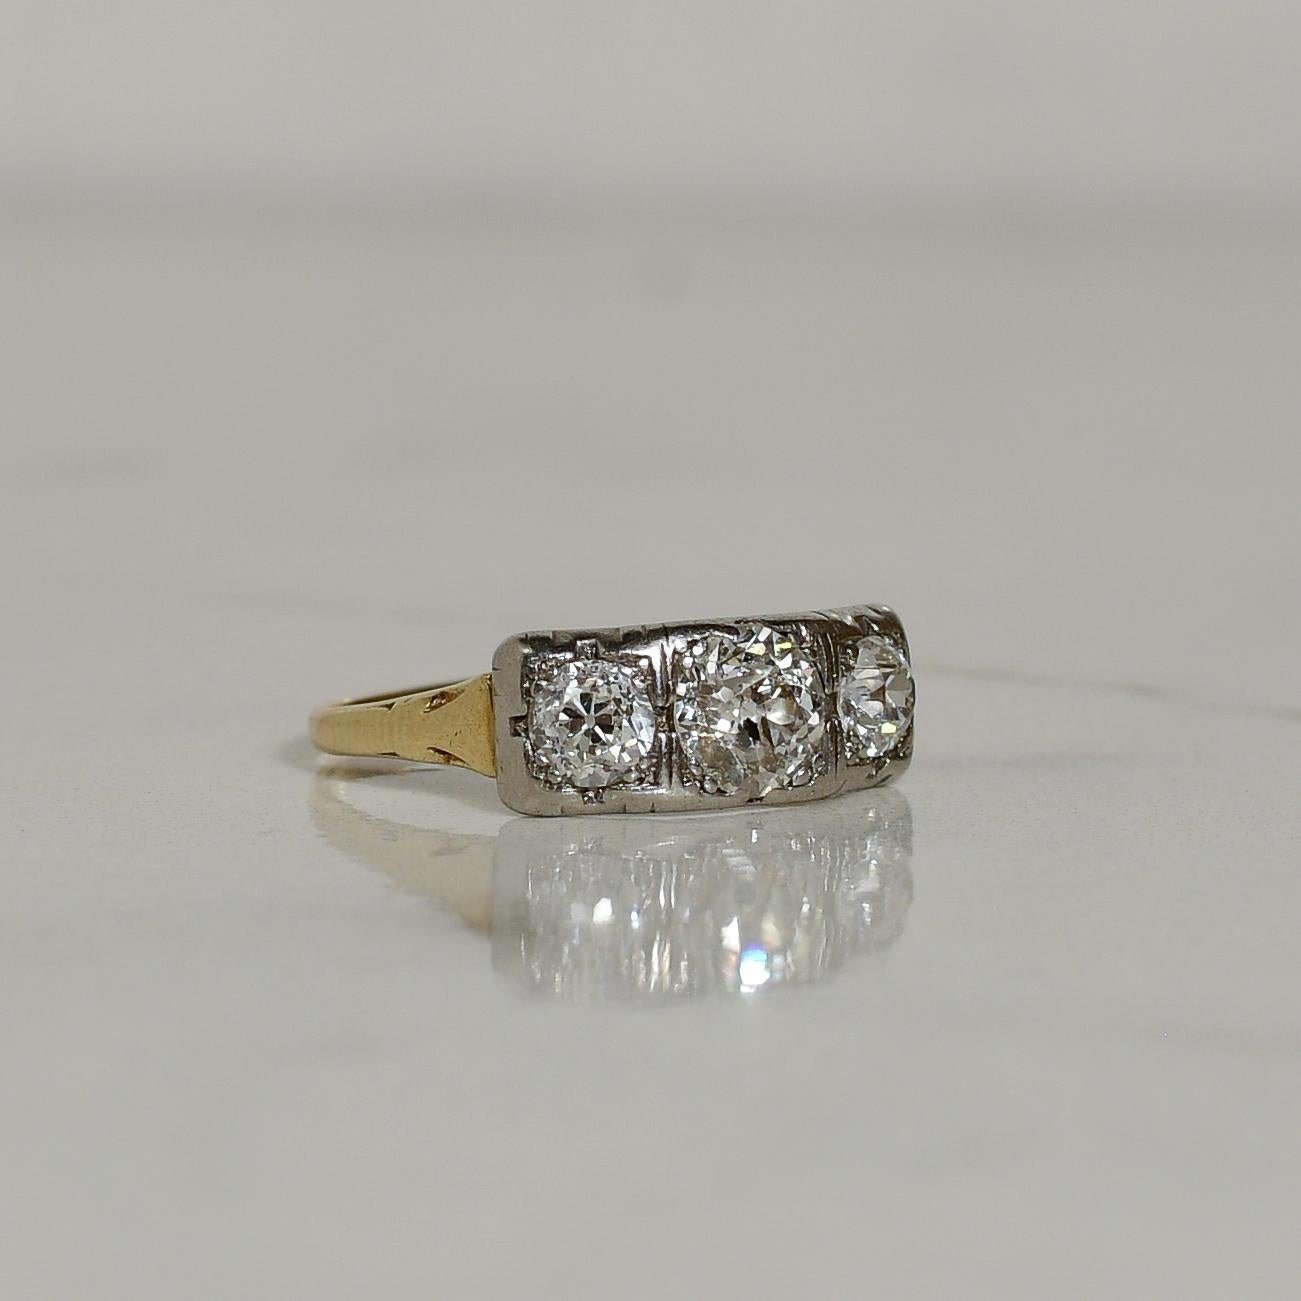 1.3cttw Art Deco 3 Stone Old European Cut Diamond Ring in 14K Gold & Platinum 1